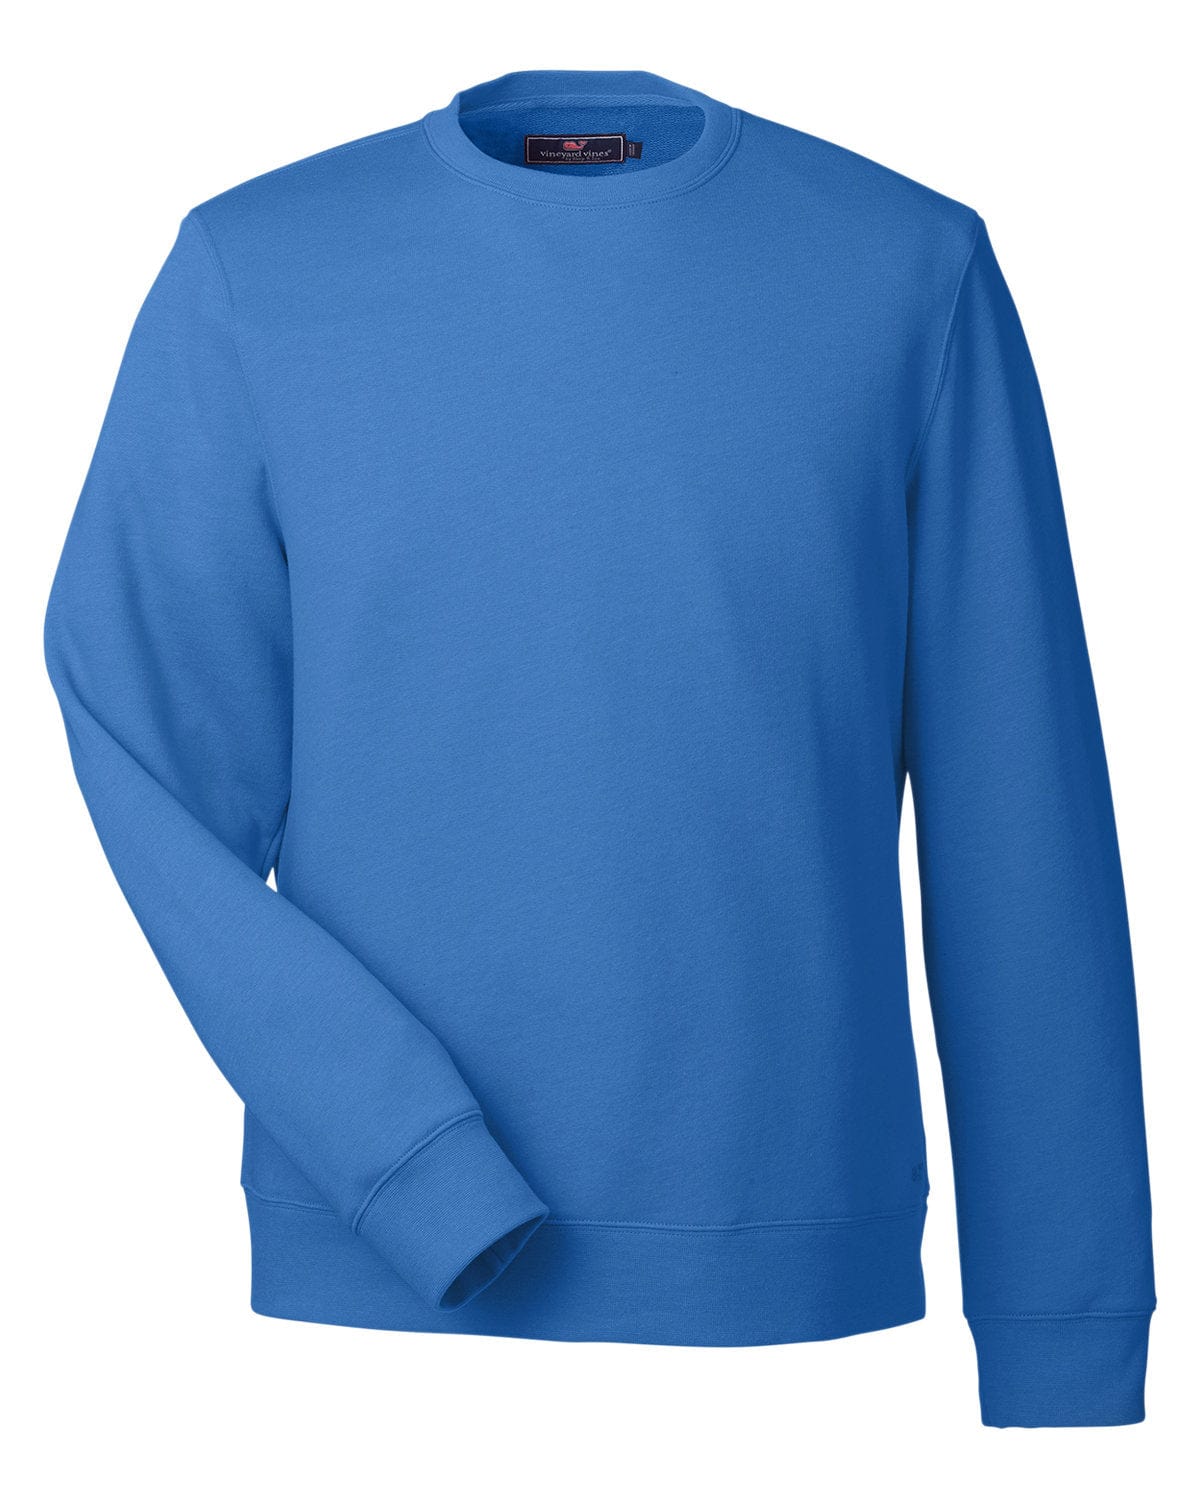 Vineyard Vines Shirt Mens Medium Blue Fishing Sweatshirt Long